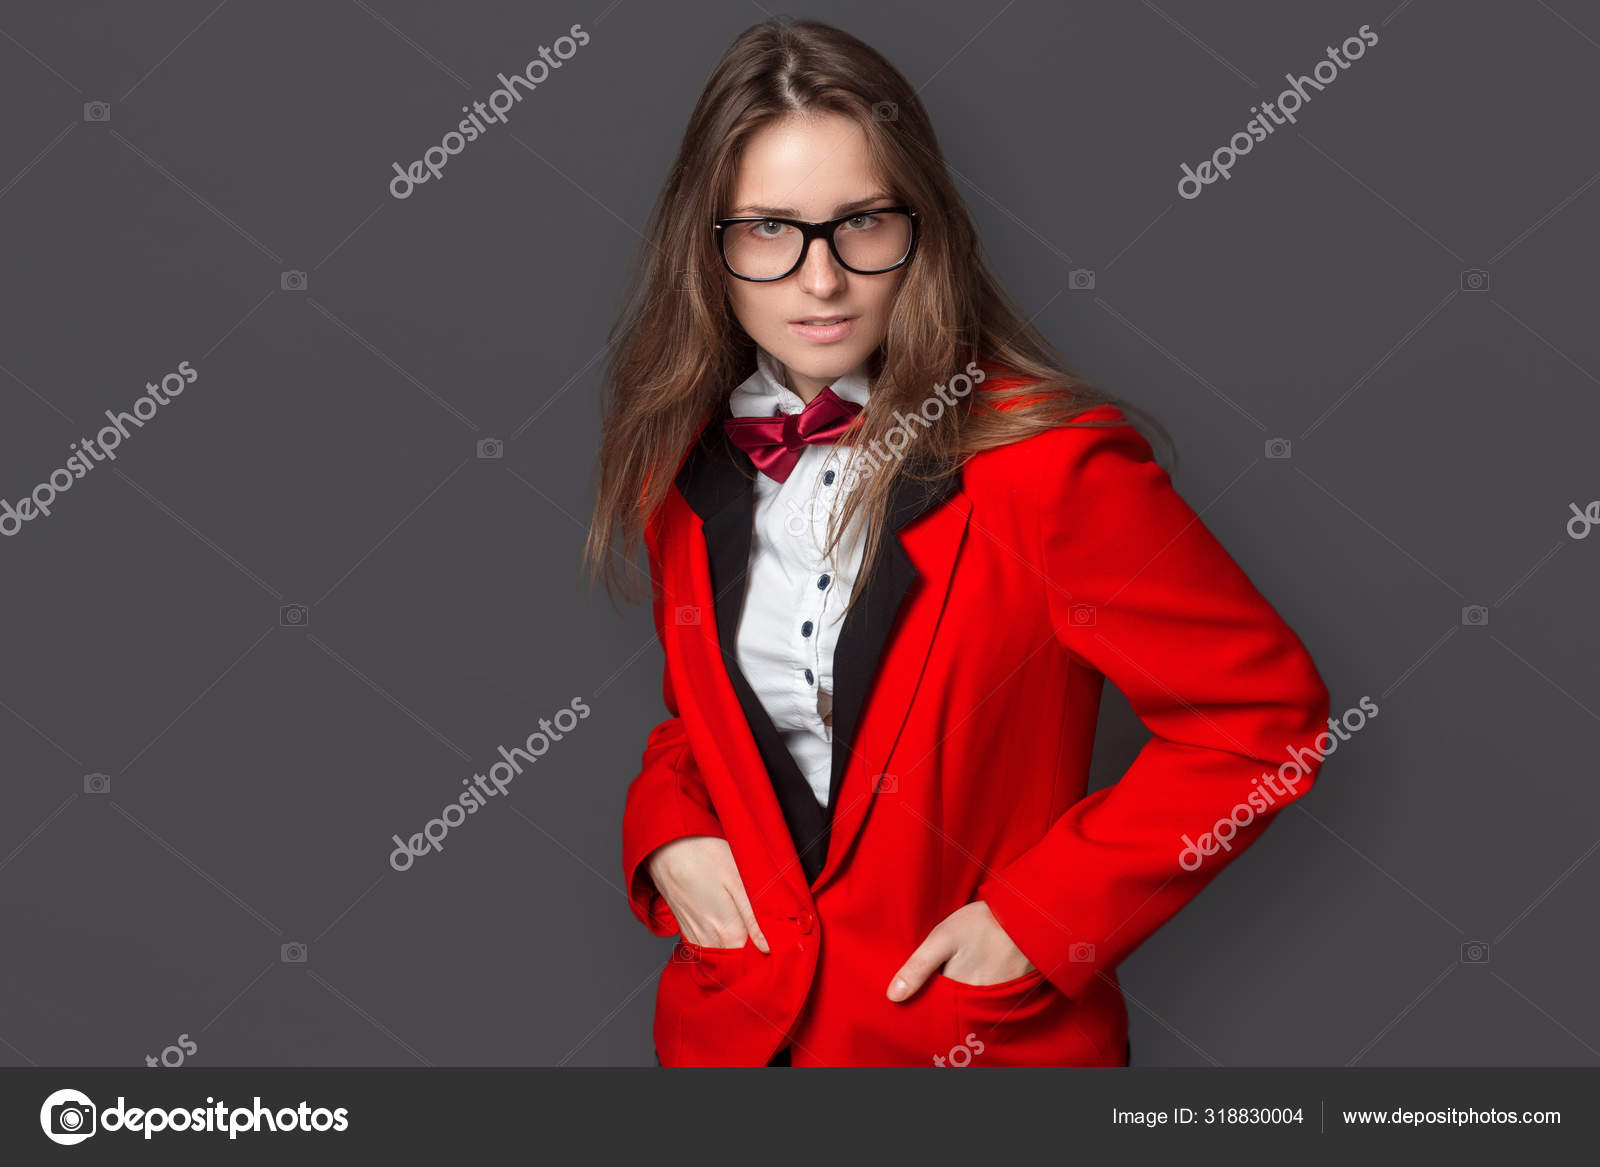 black tie red shirt